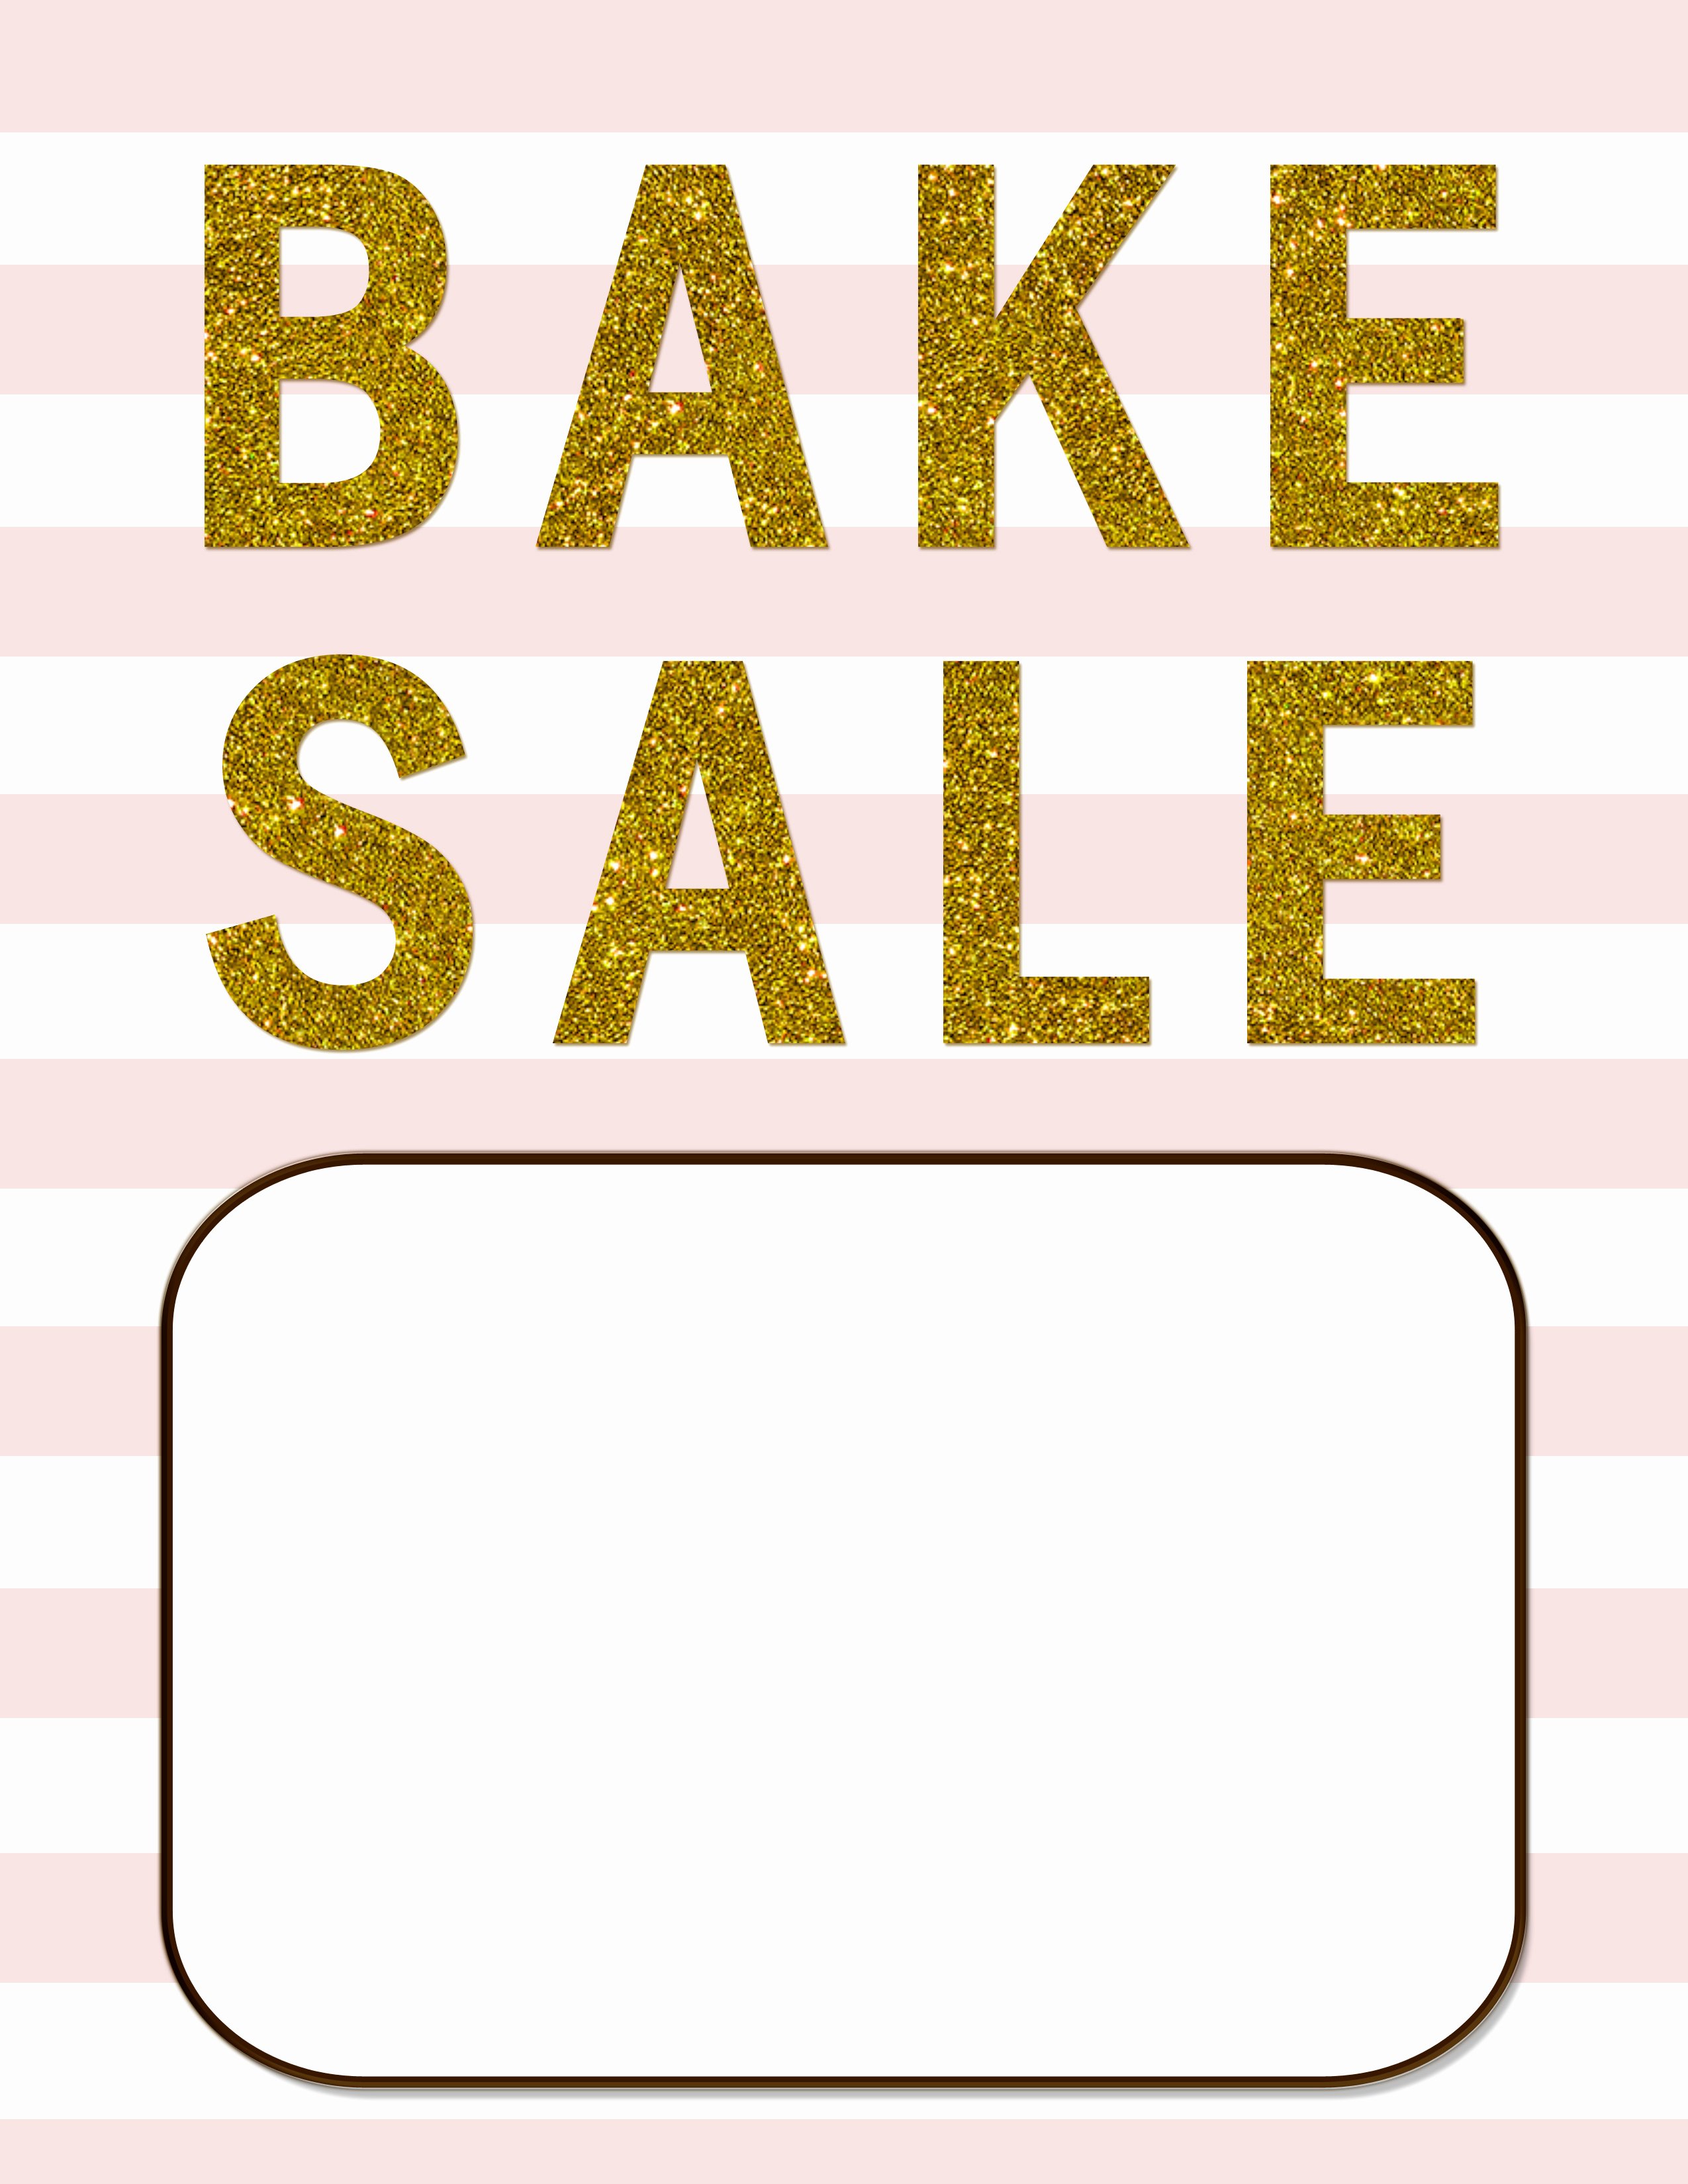 Bake Sale Flyer Templates Free Unique Bake Sale Flyers – Free Flyer Designs